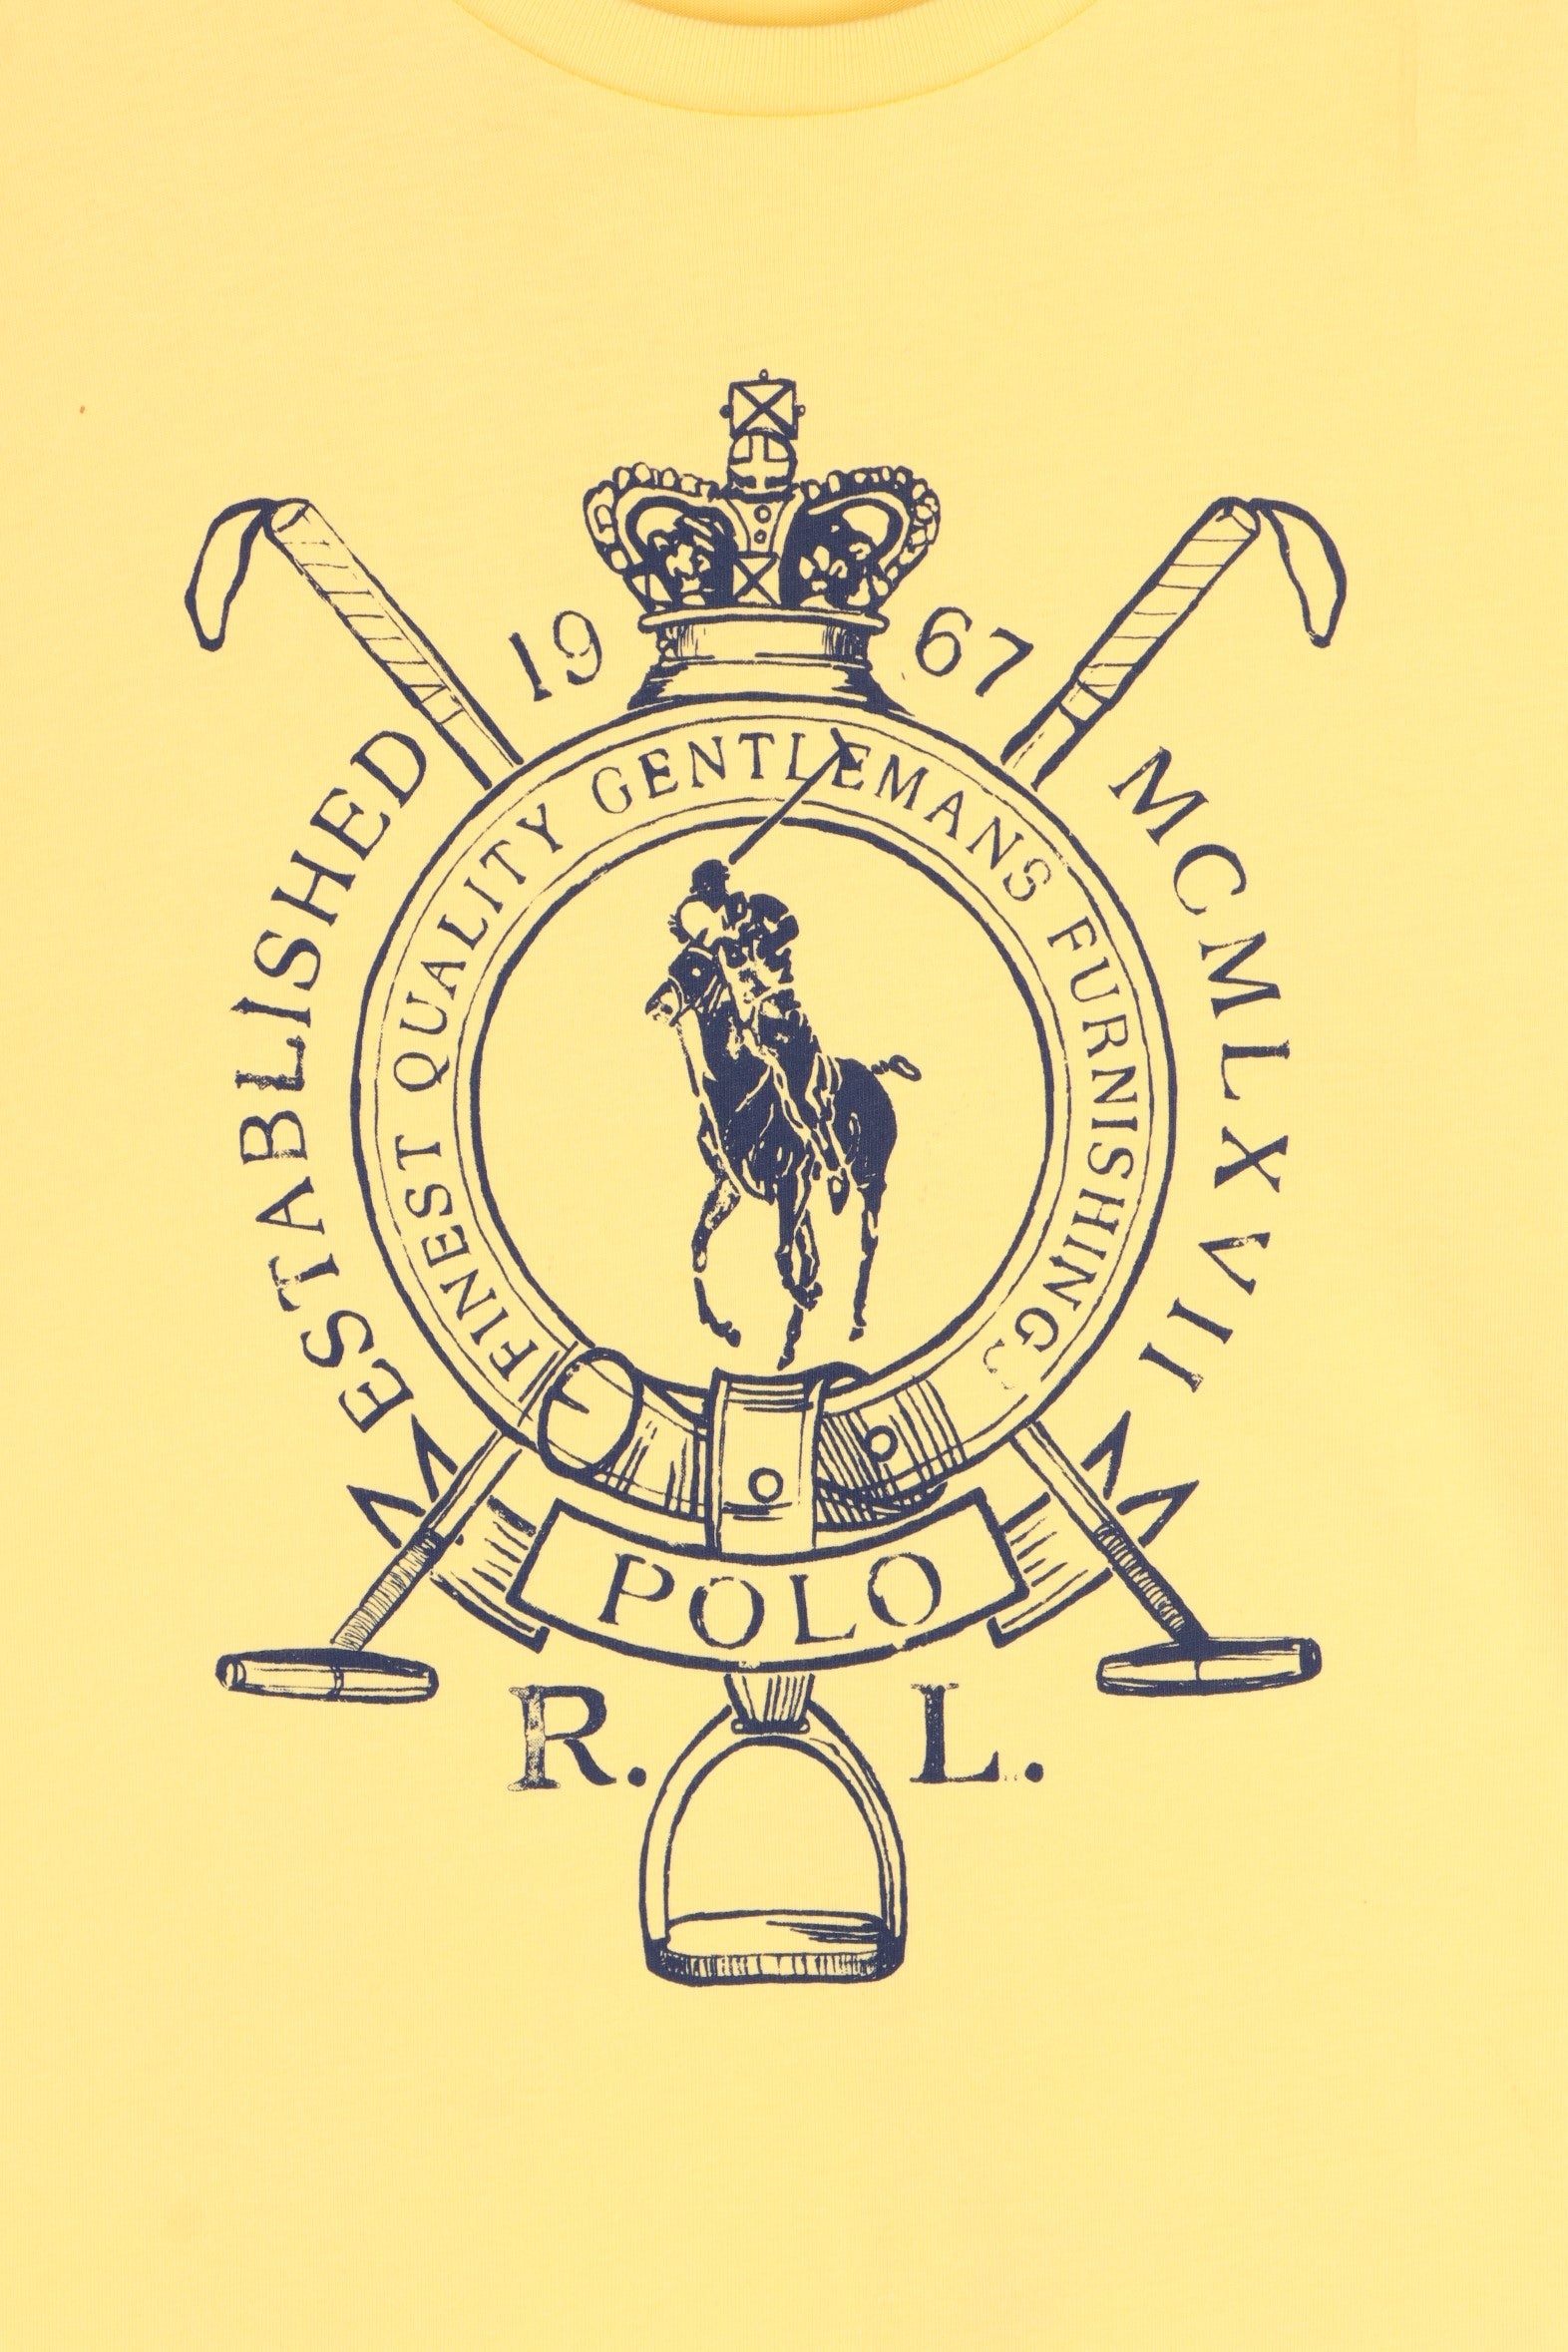 ralph lauren polo logo outline